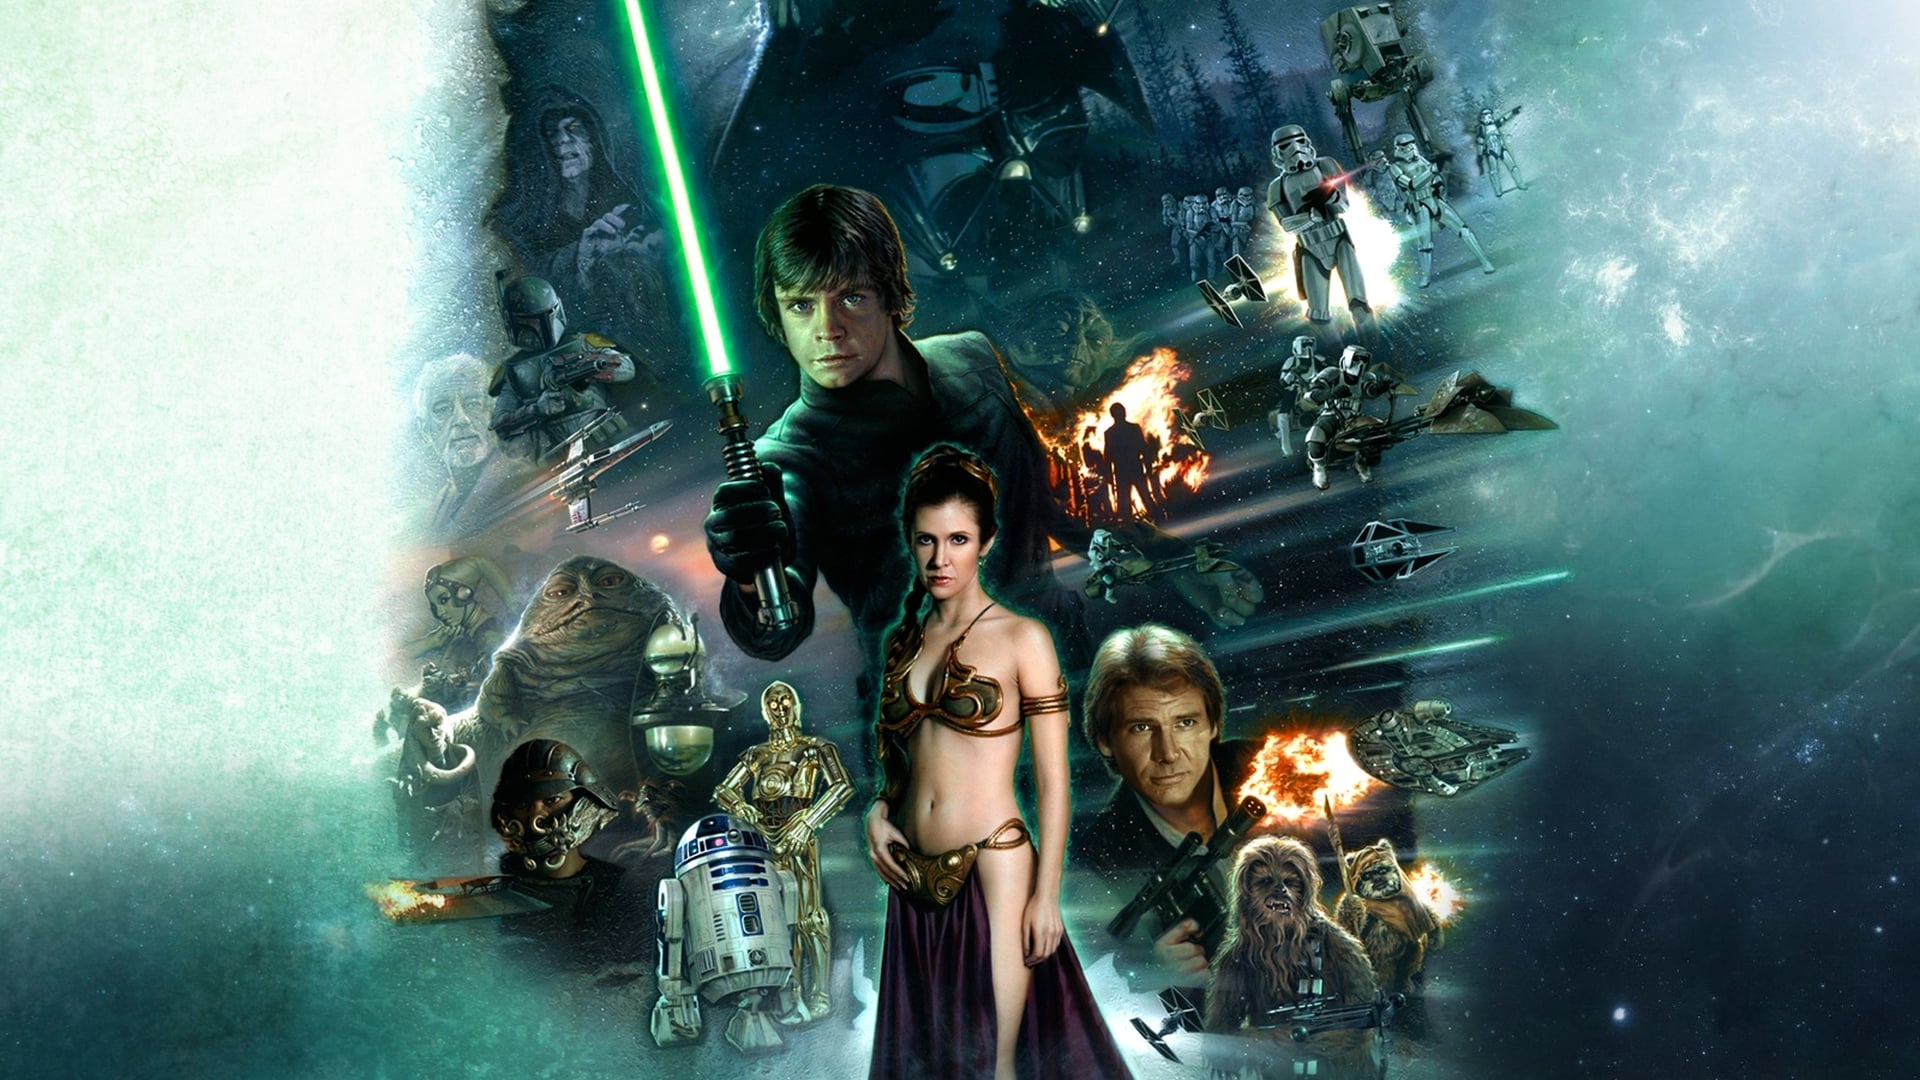 Image du film Star Wars Episode VI : le retour du Jedi ip2tea2a77qhbhrfcfkid6wfoqhjpg